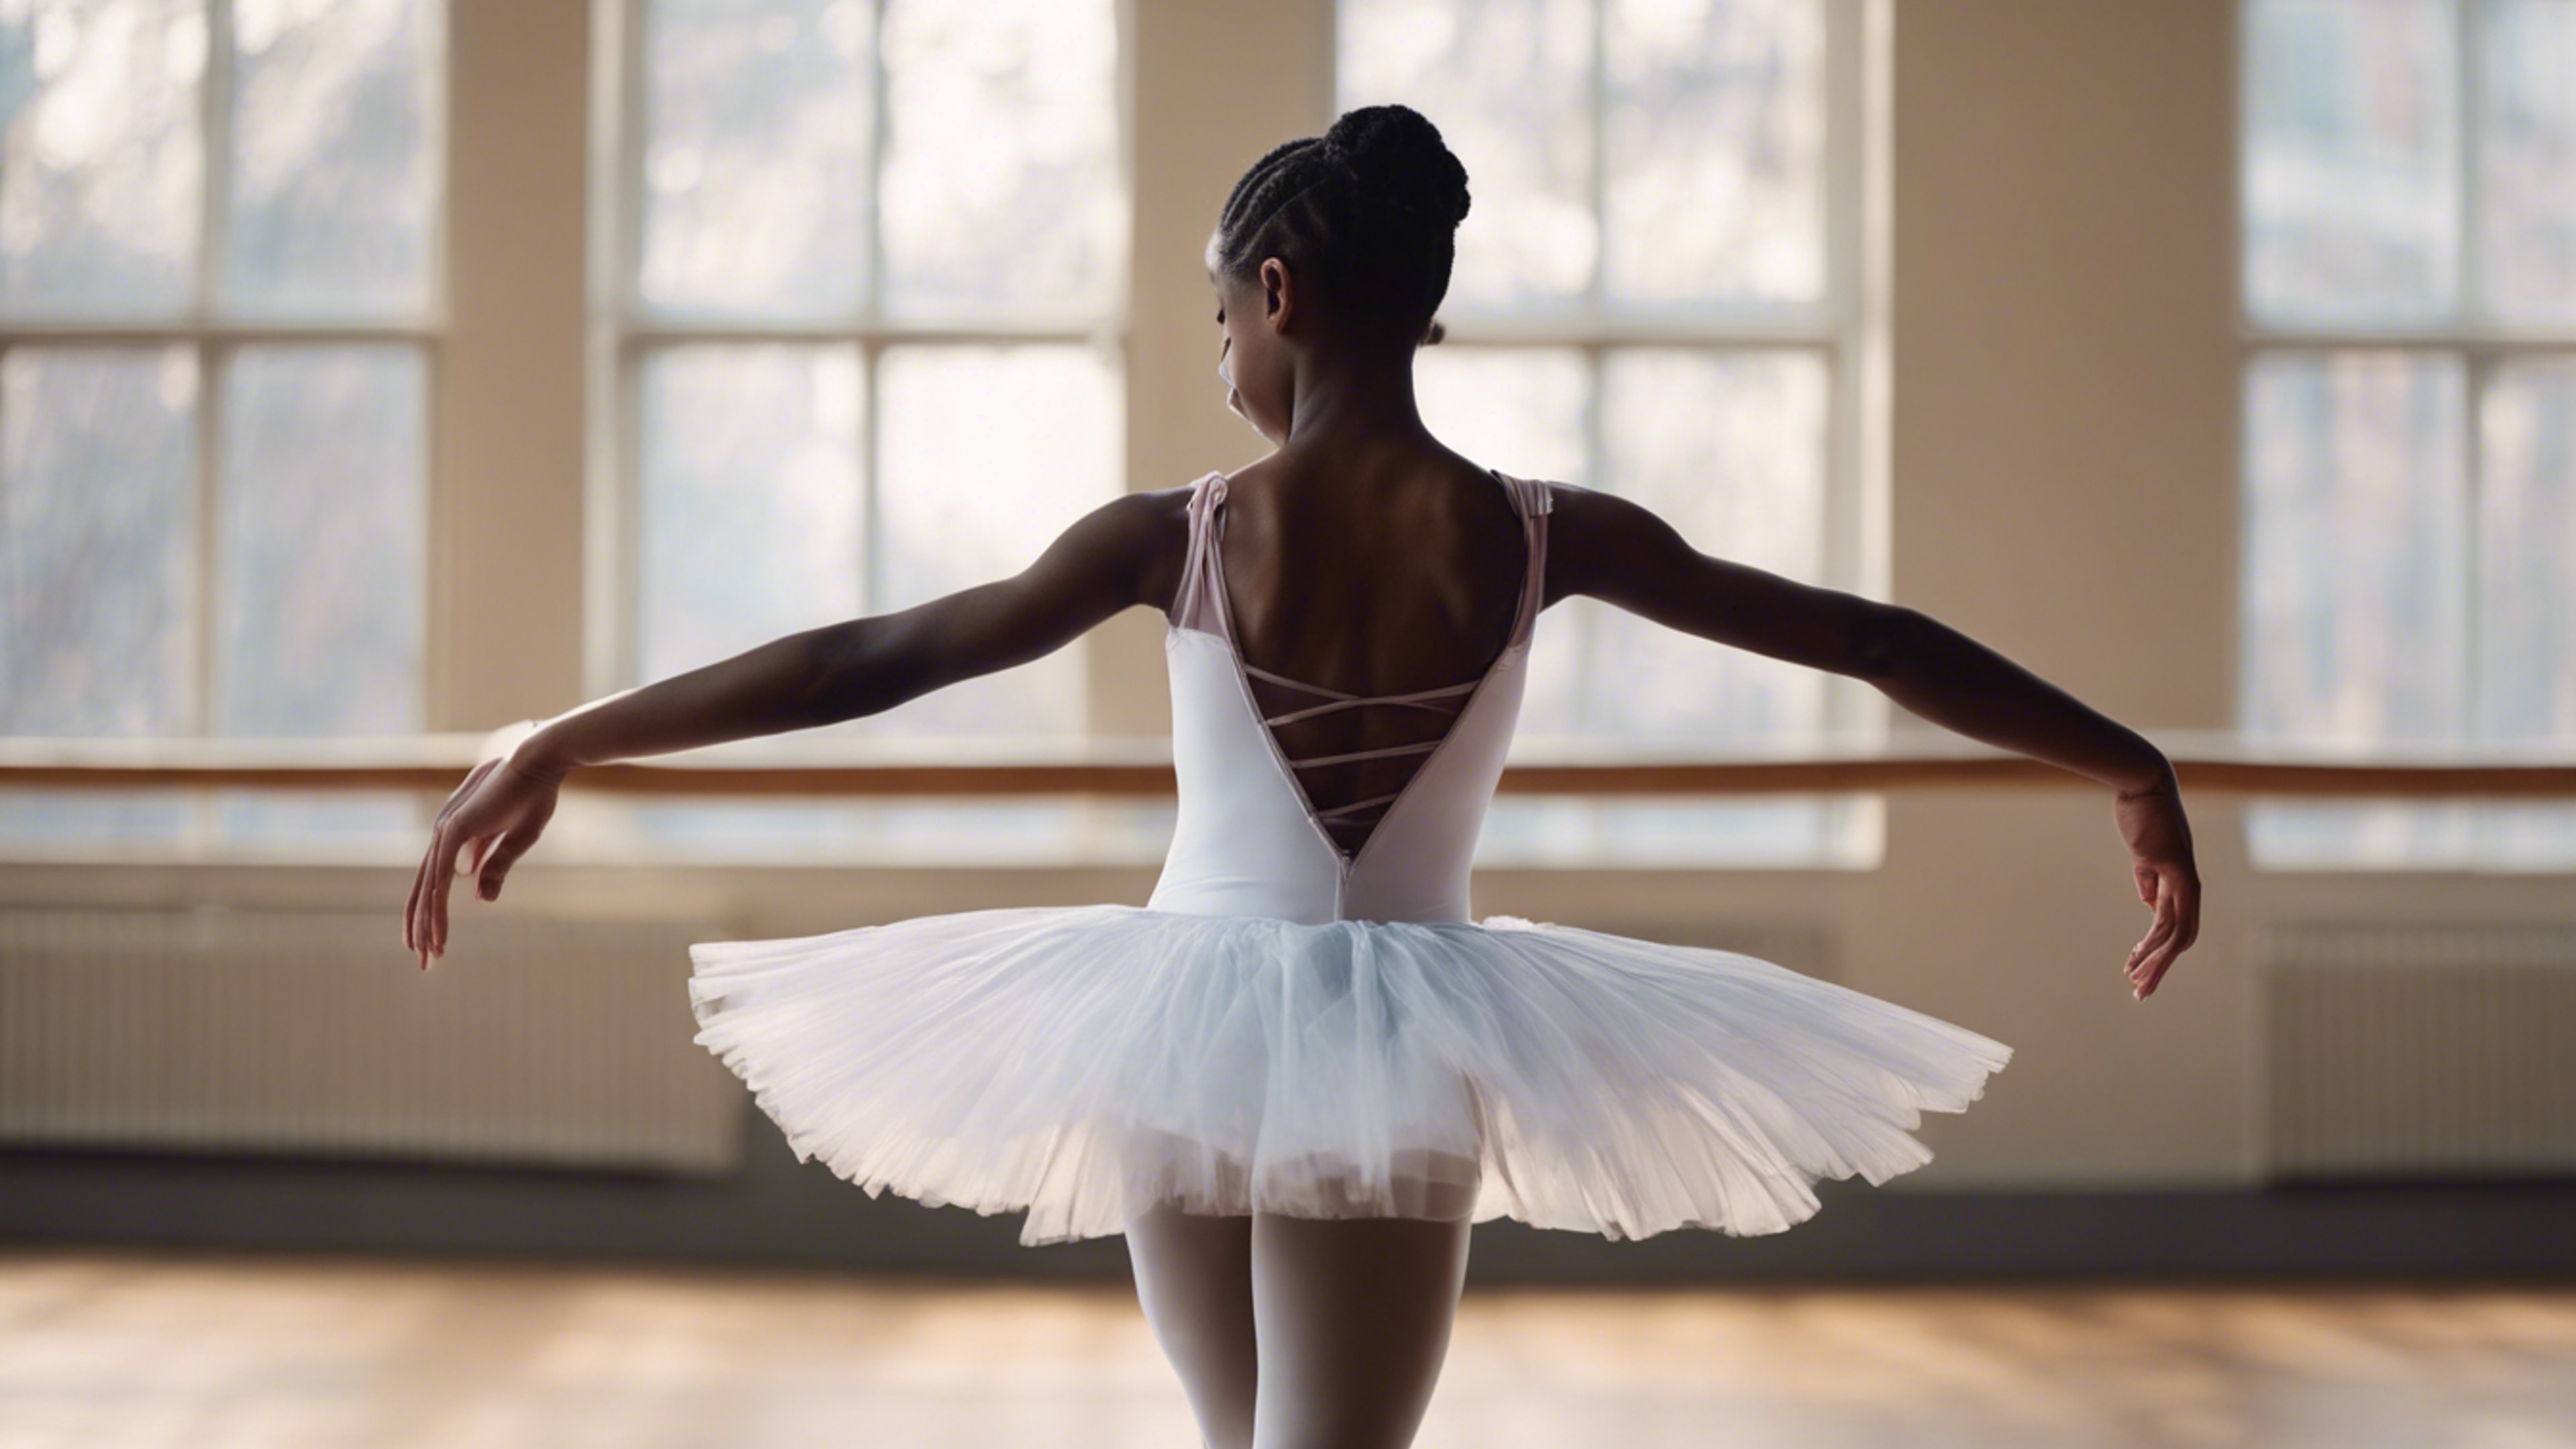 A young black girl practicing ballet in a beautiful satin tutu. Дэлгэцийн зураг[c9fc18550cde4bfca1b8]